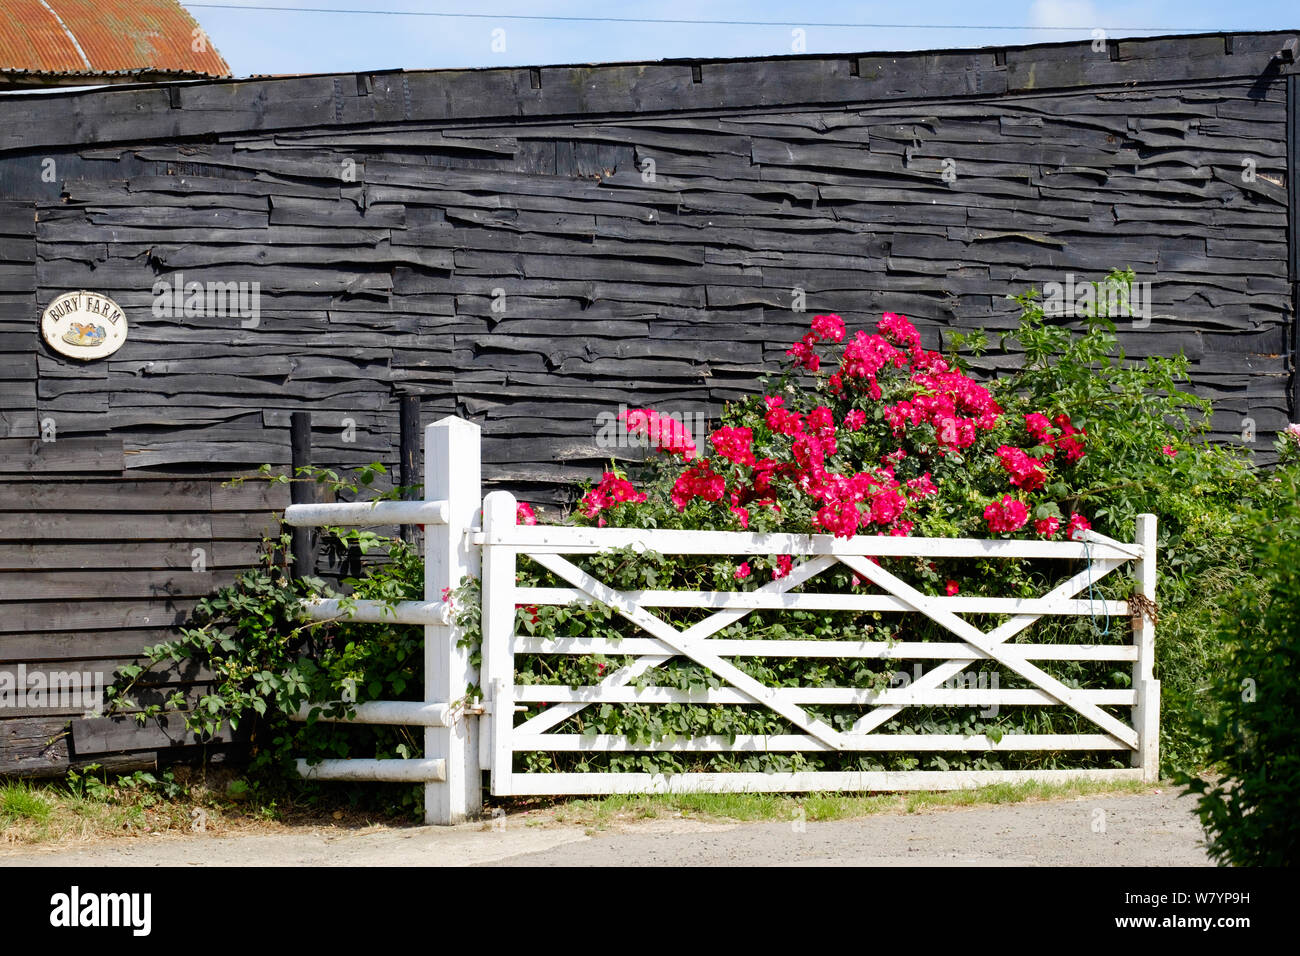 Bury Farm sign on wooden shingled structure, with white horizontal gate & overgrown hot pink flower bush. Edwarebury Lane, Edgware, Greater London. Stock Photo